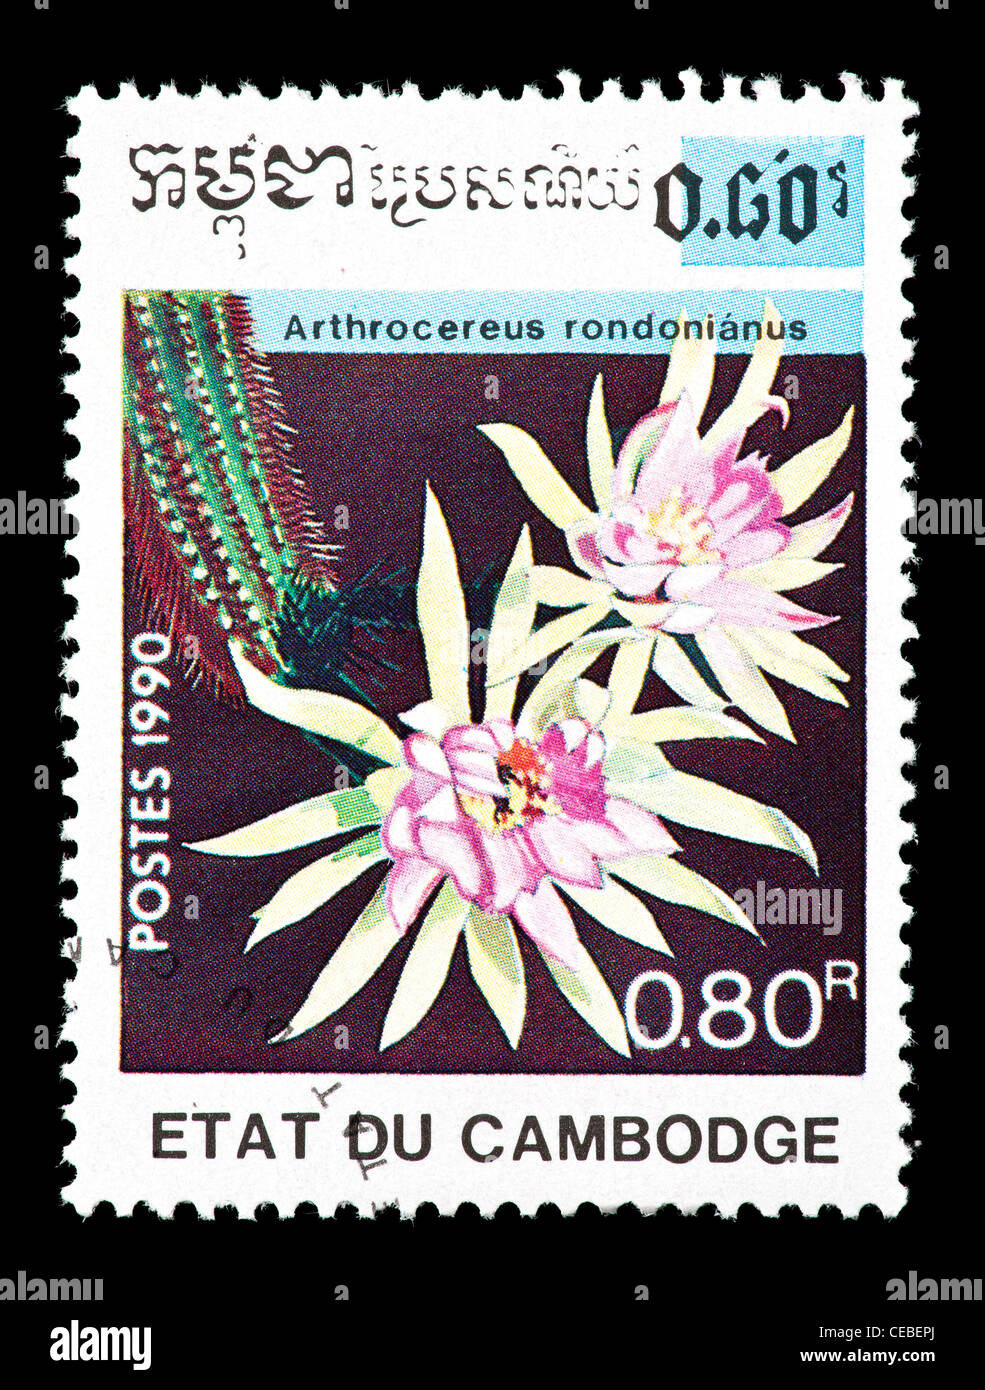 Postage stamp from Cambodia depicting a cactus flower (Arthrocereus rondonianus) Stock Photo